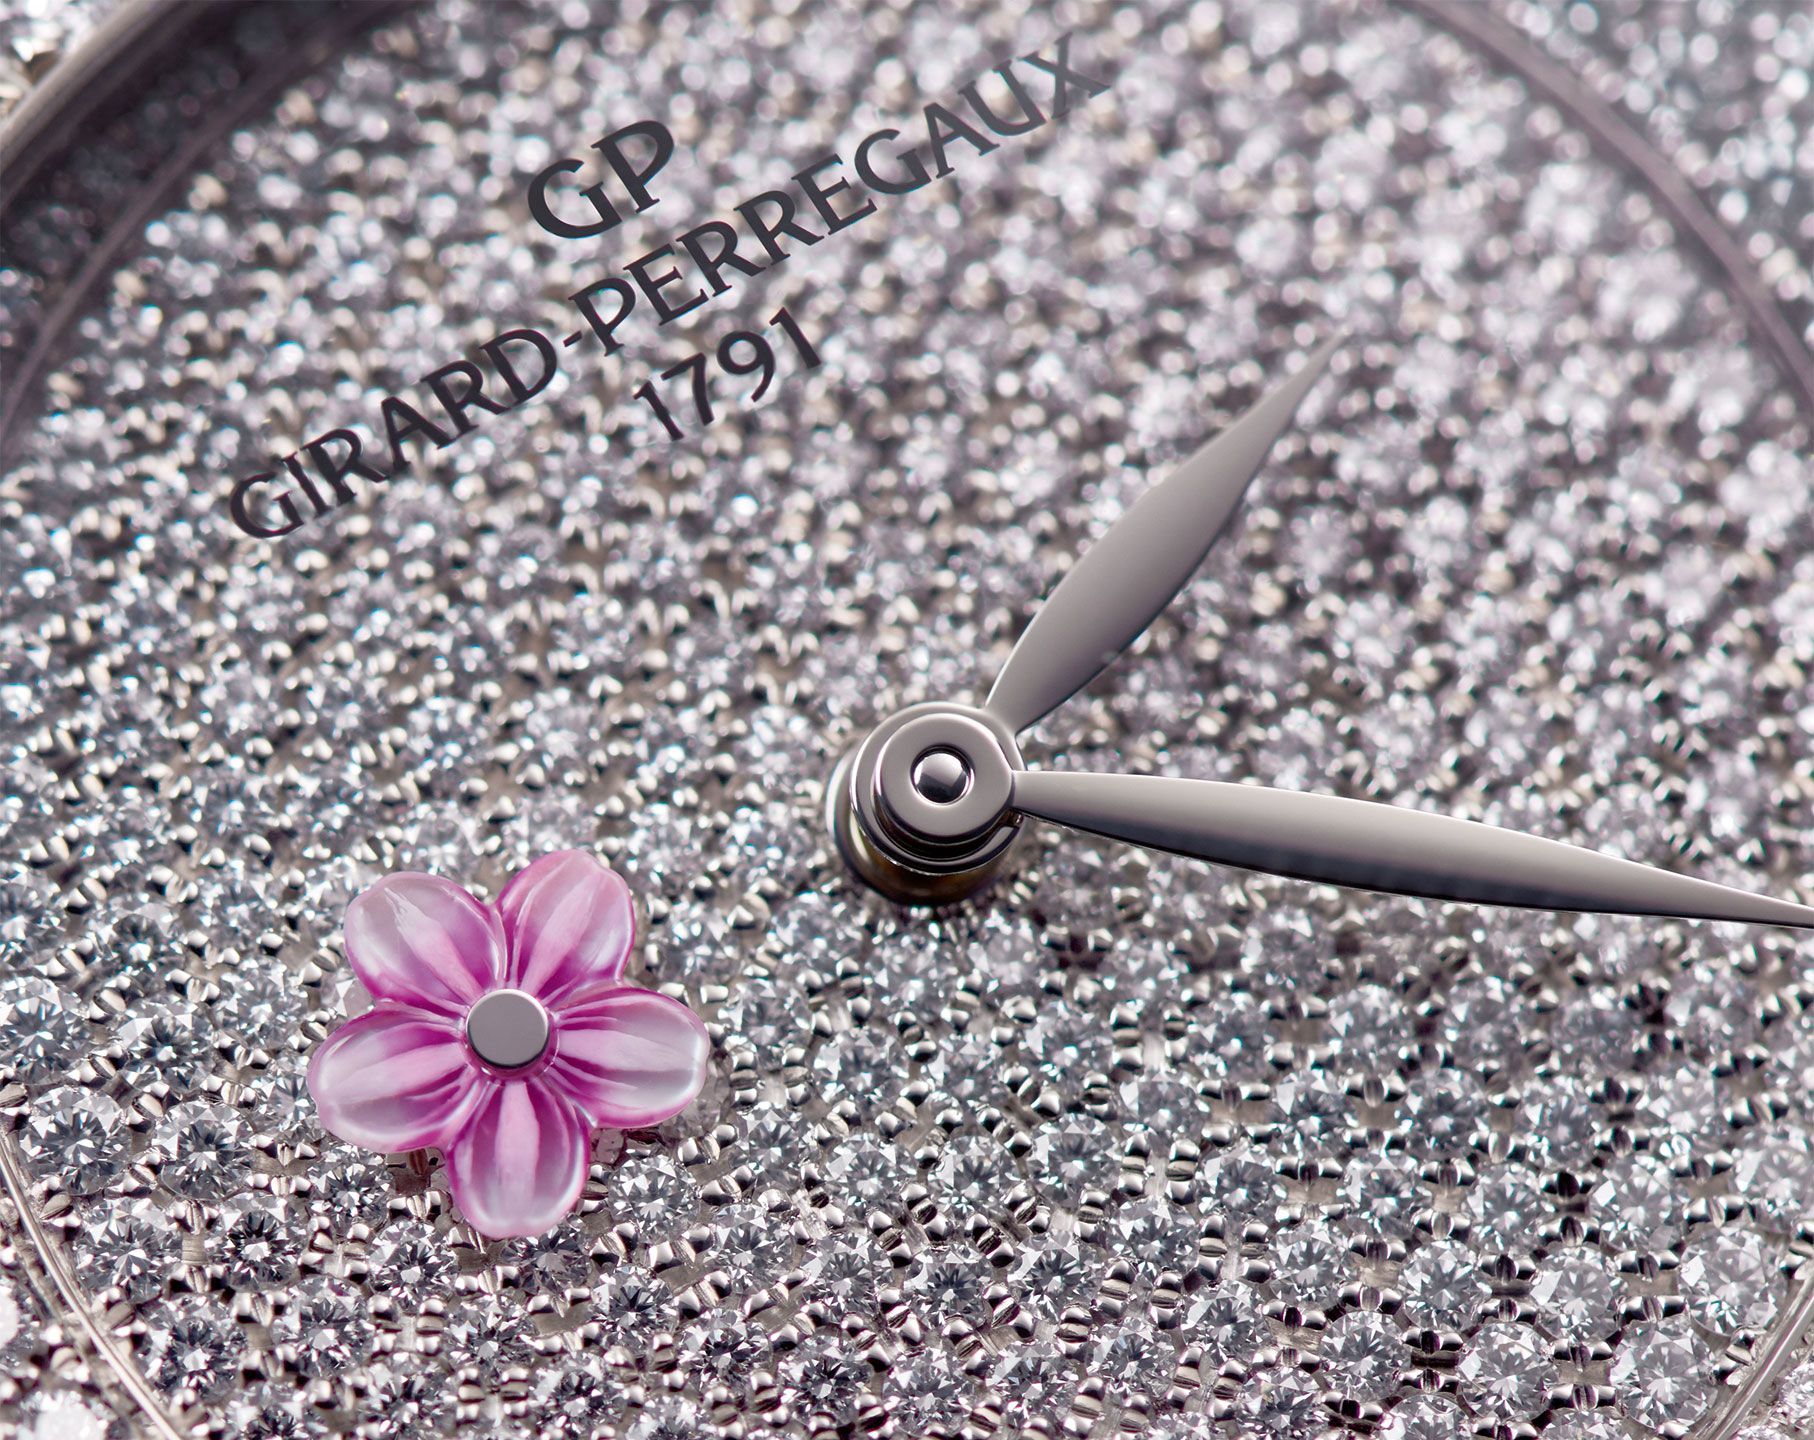 Girard-Perregaux High Jewellery 30.75 mm Watch in Diamond pavé Dial For Women - 7